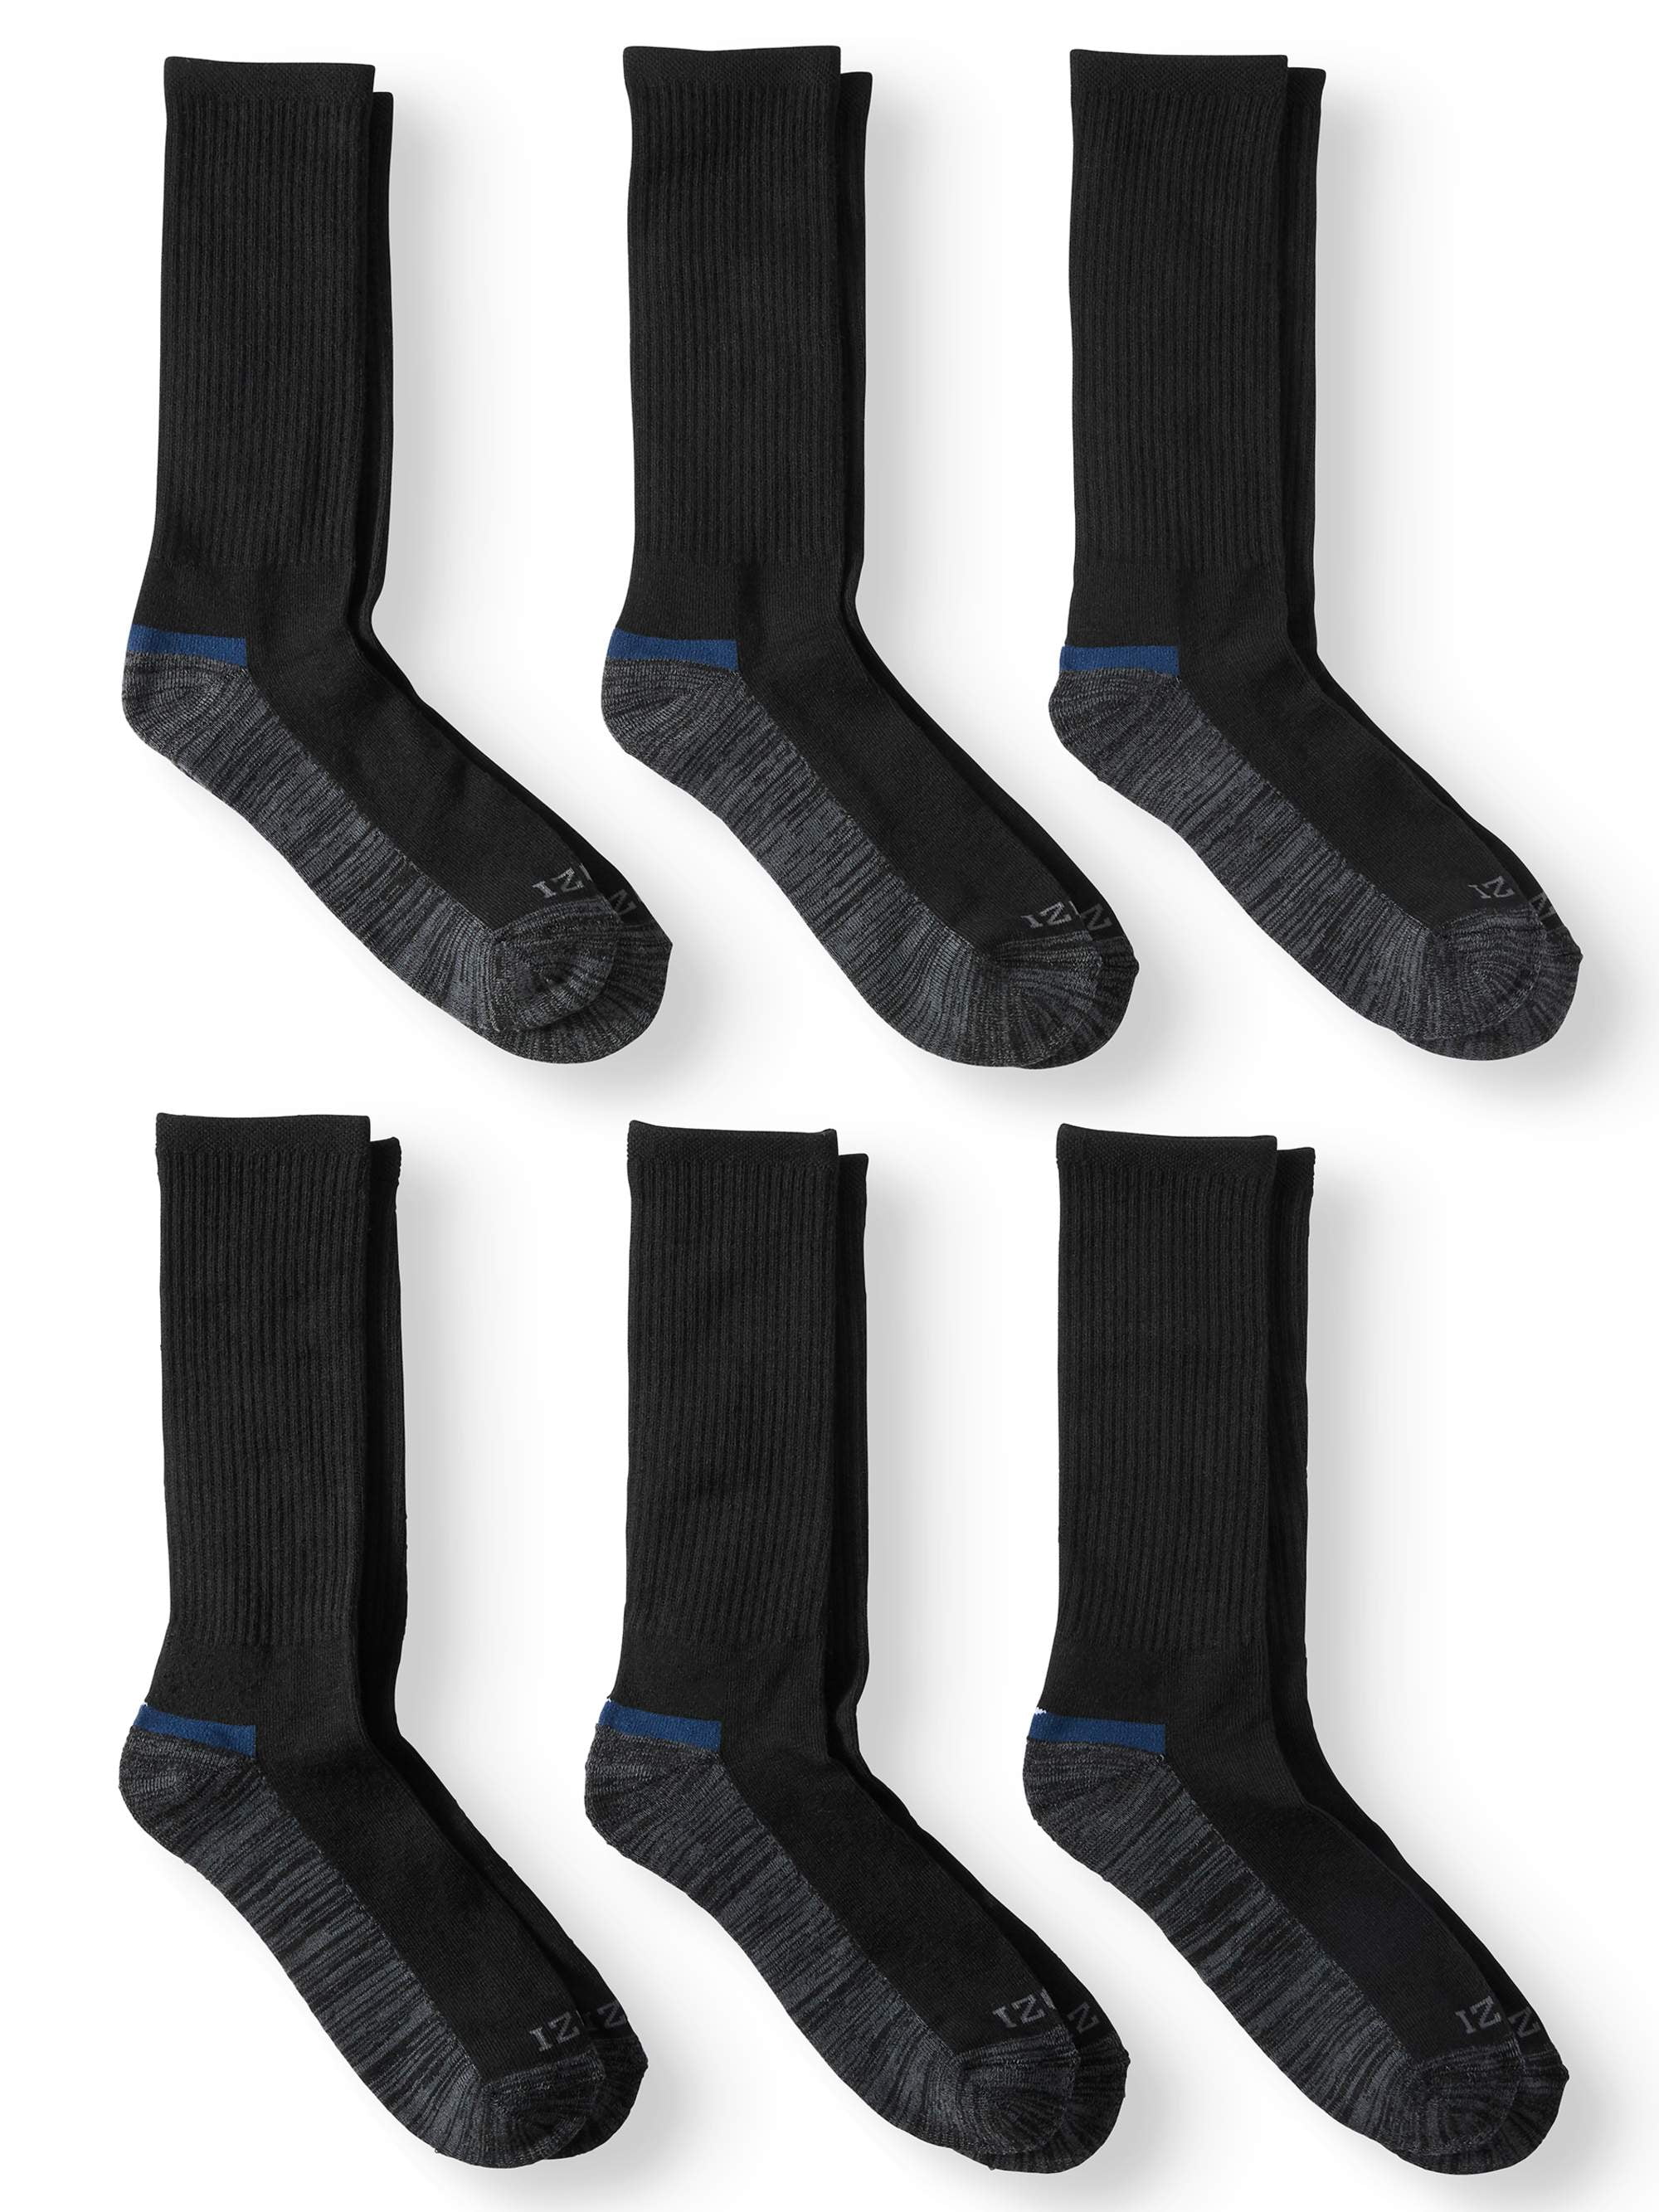 IZOD Men’s Advantage Performance Crew Socks, 6-Pack - Walmart.com